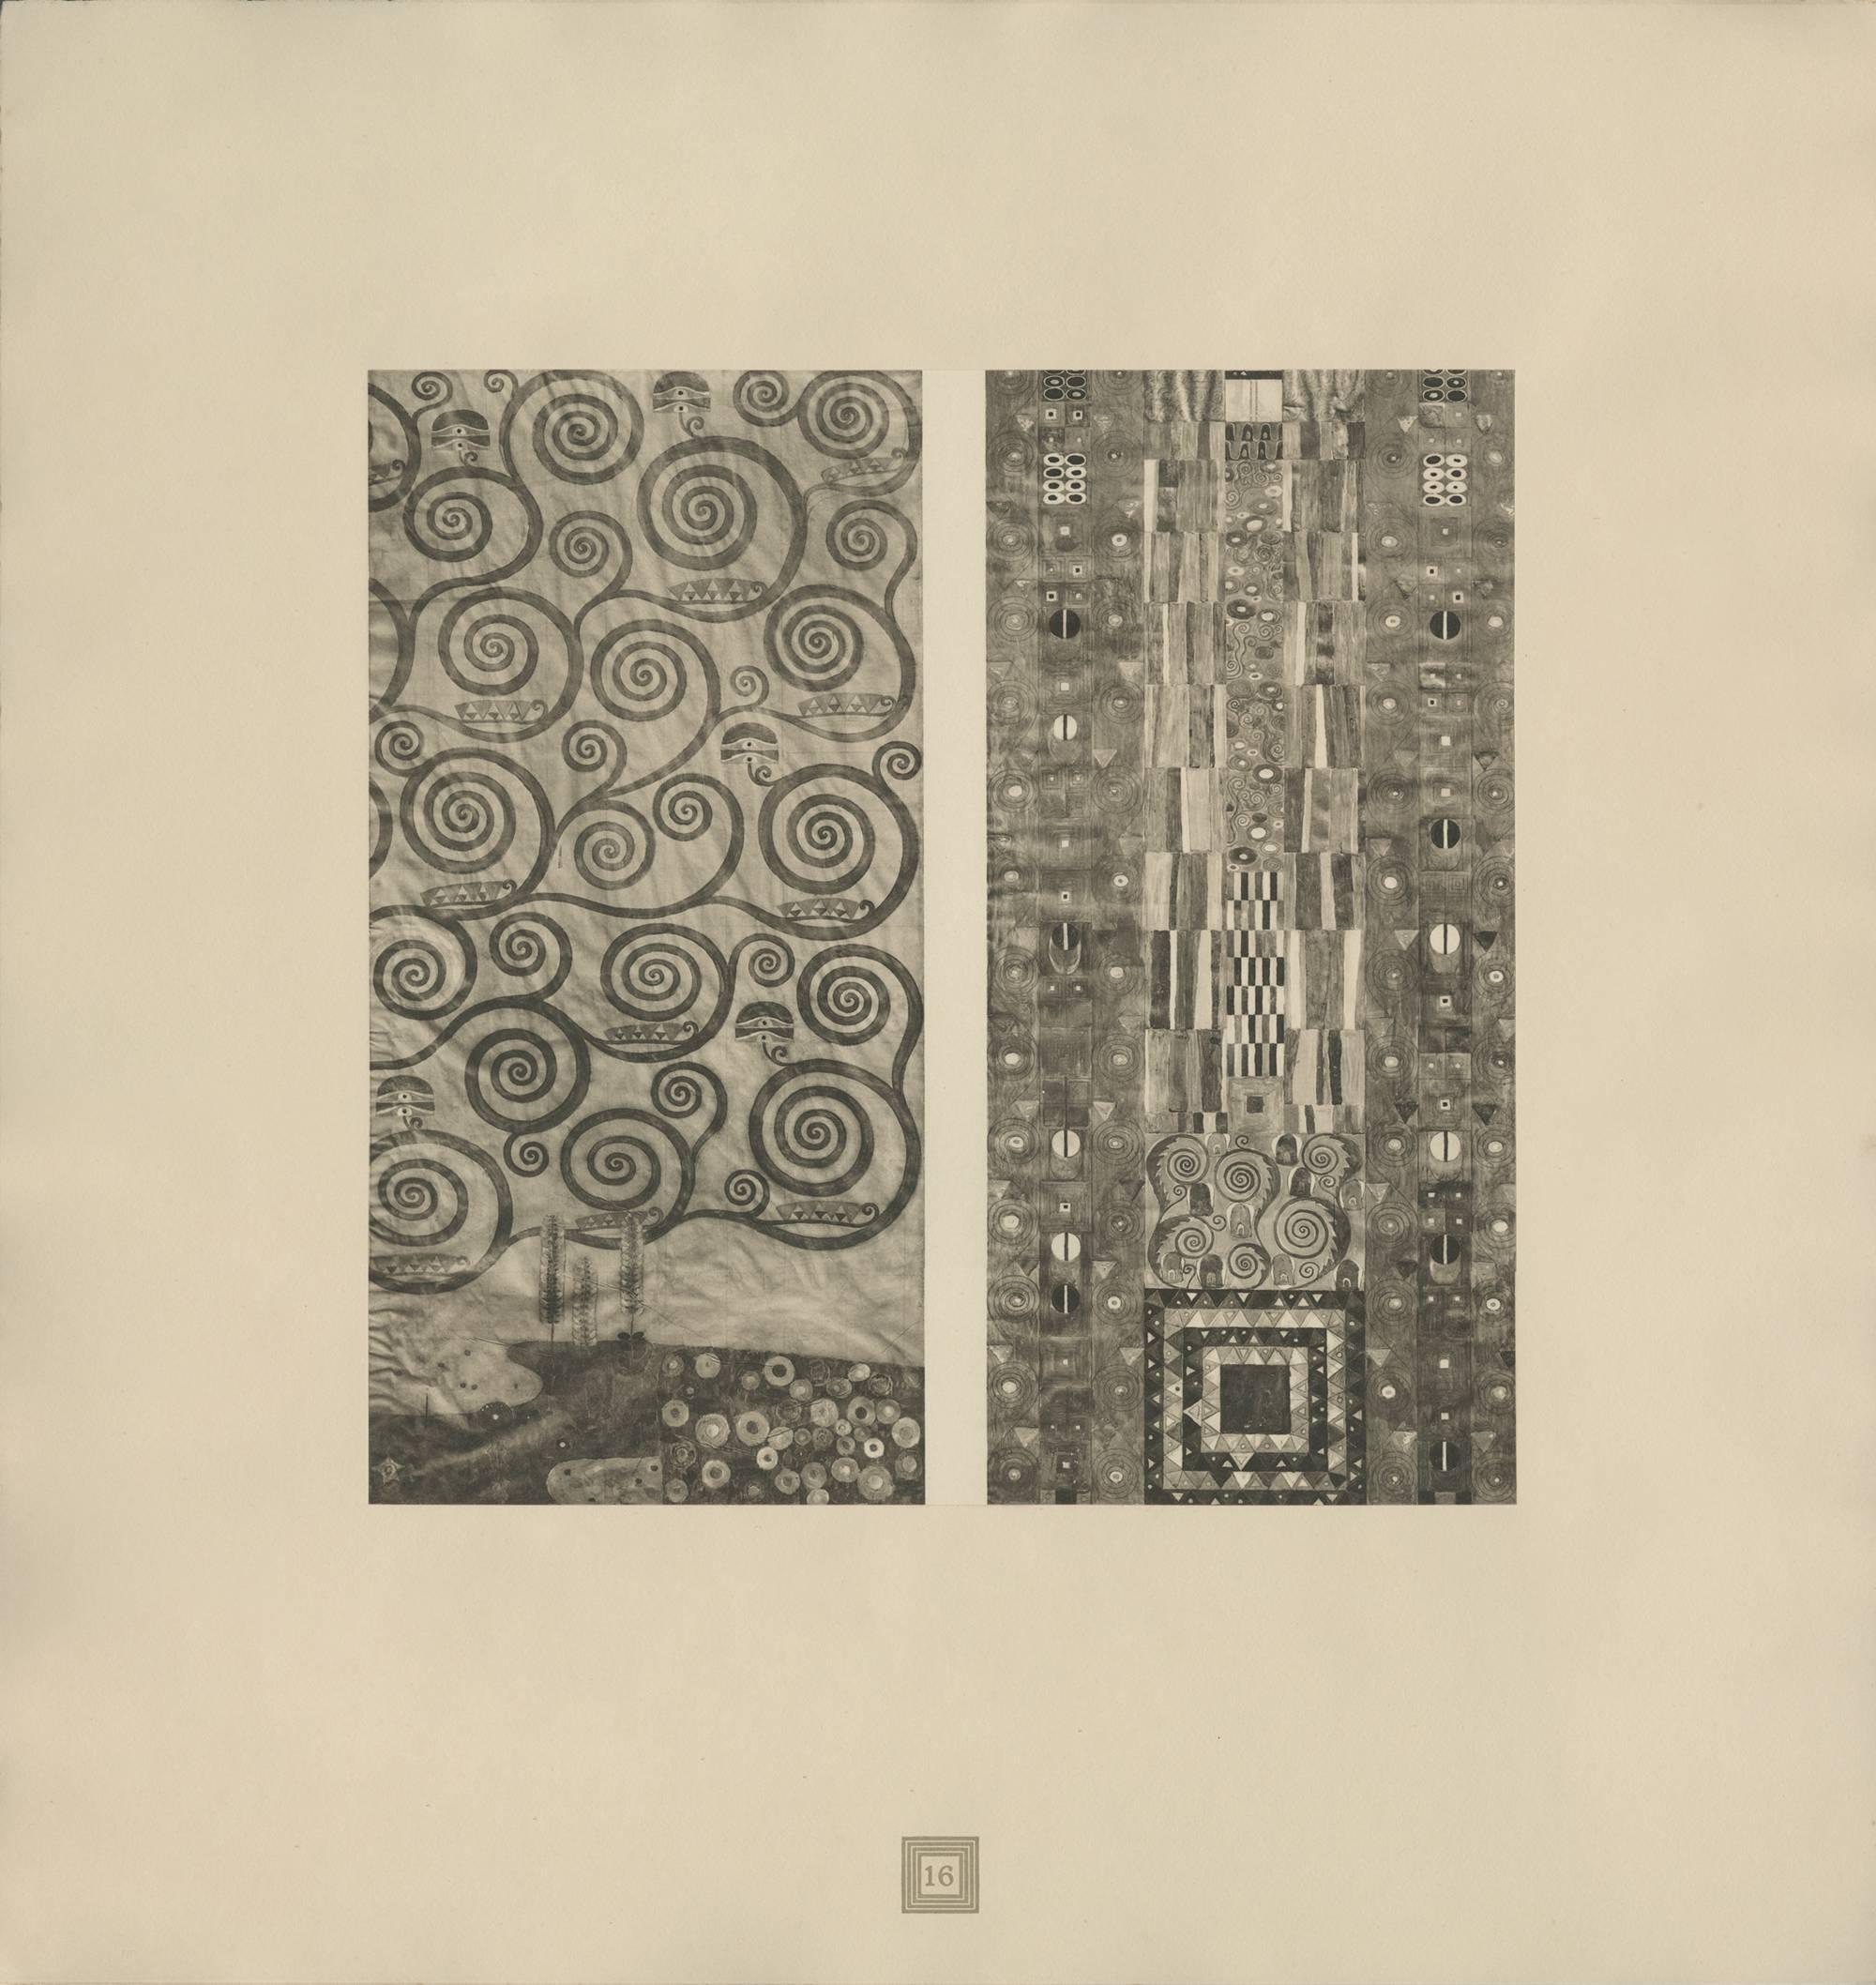 After Gustav Klimt, Max Eisler Plates #13-16, black & white collotypes after the 1911 cartoon originally in crayon, graphite pencil, gouache and metal powders.
#13 Der Lebensbaum (Anfang), aka The Tree of Life (Beginning)
#14 Der Lebensbaum